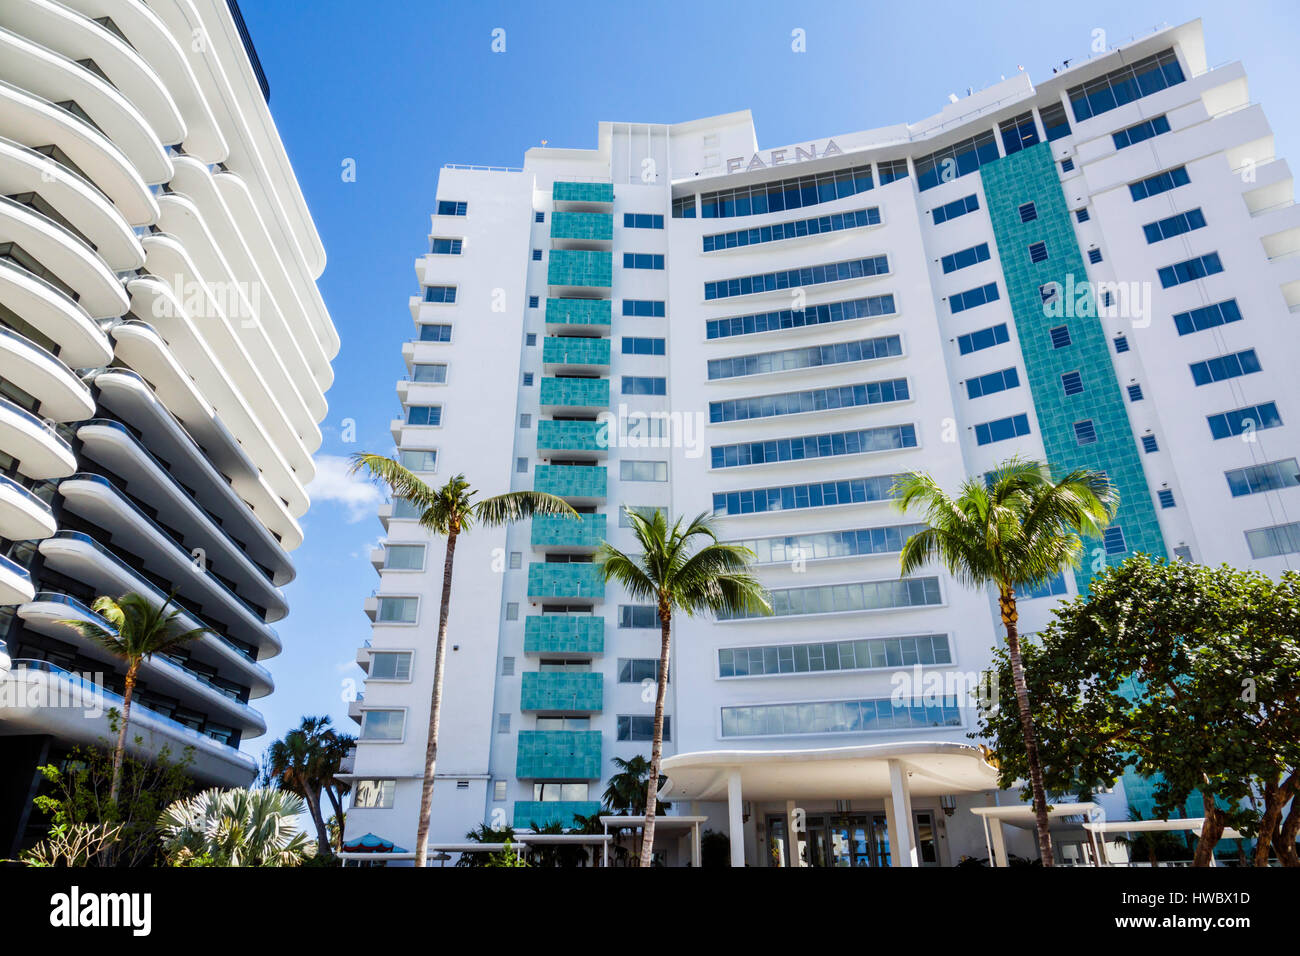 Miami Beach Florida,Faena District,Collins Avenue,Faena Hotel,Faena House,hotel,condominium residences,building,exterior,modernist,architecture,FL1702 Stock Photo